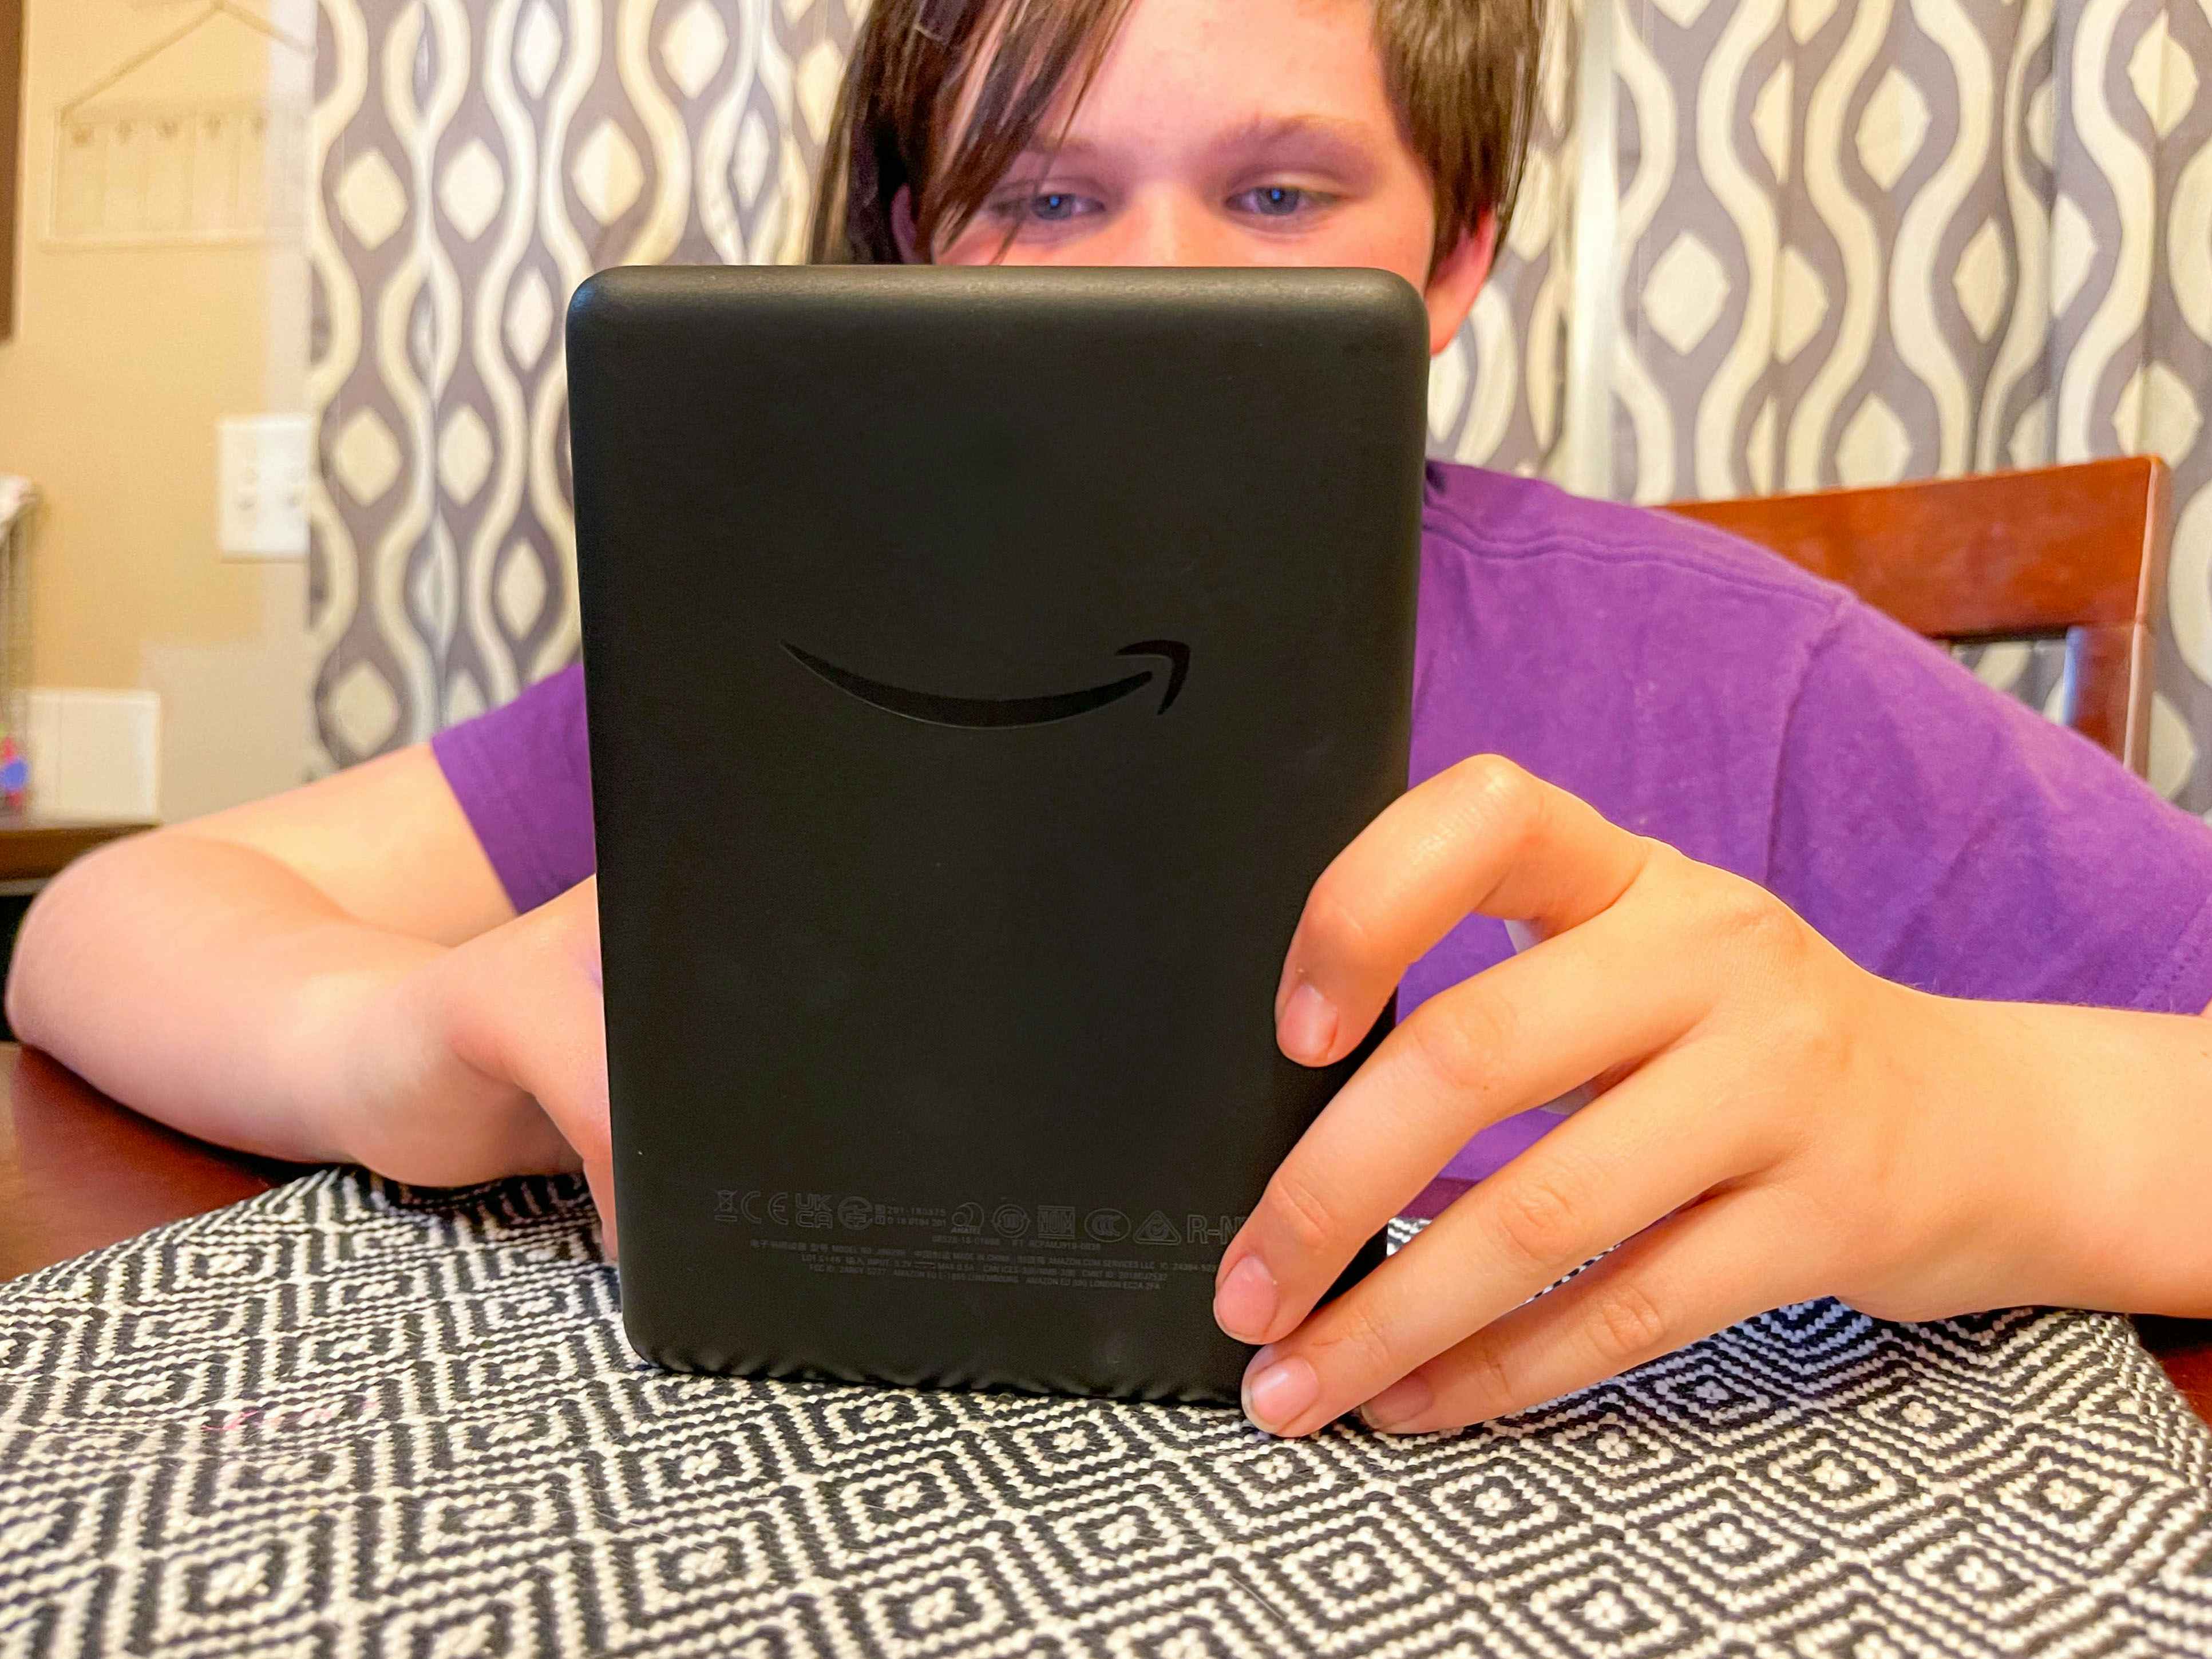 Nintendo DSi XL: Bigger, social, newest e-book - Newsday